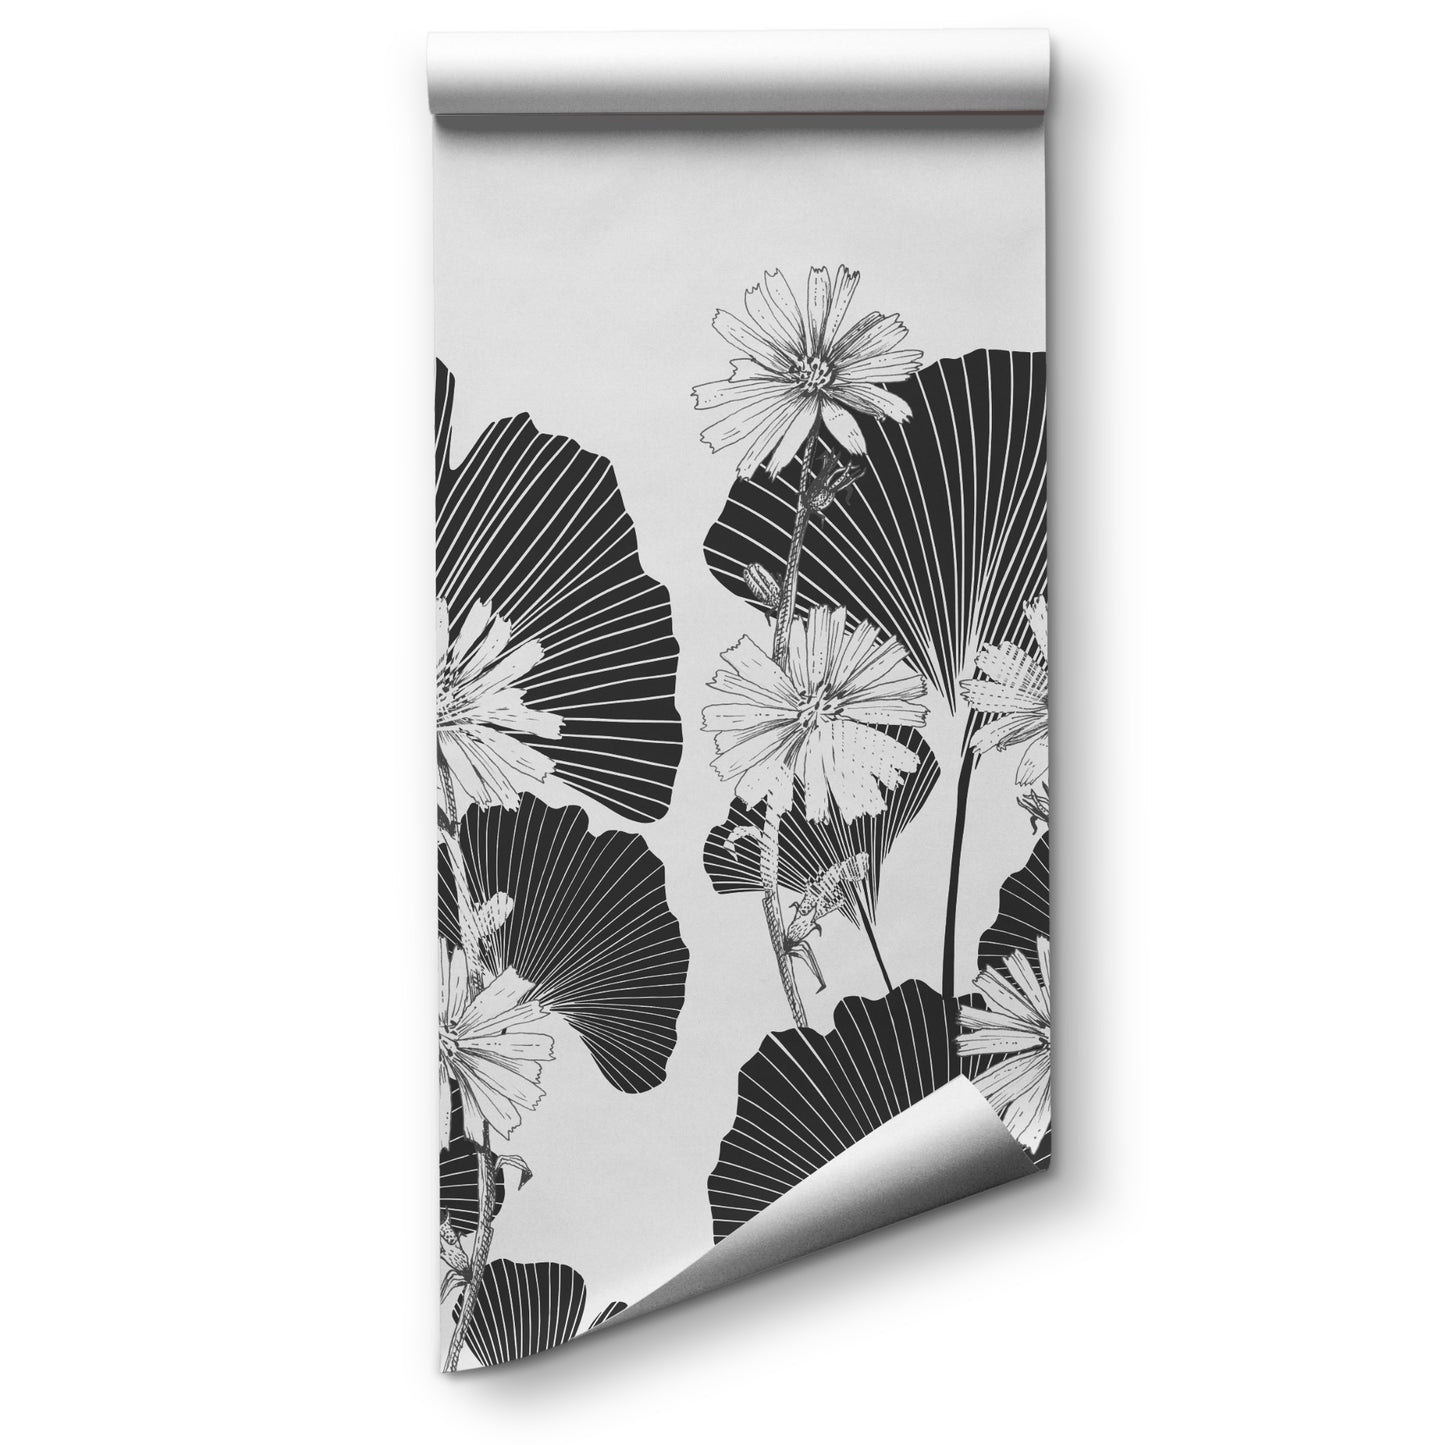 Floral Ginkgo Leaves  Wallpaper